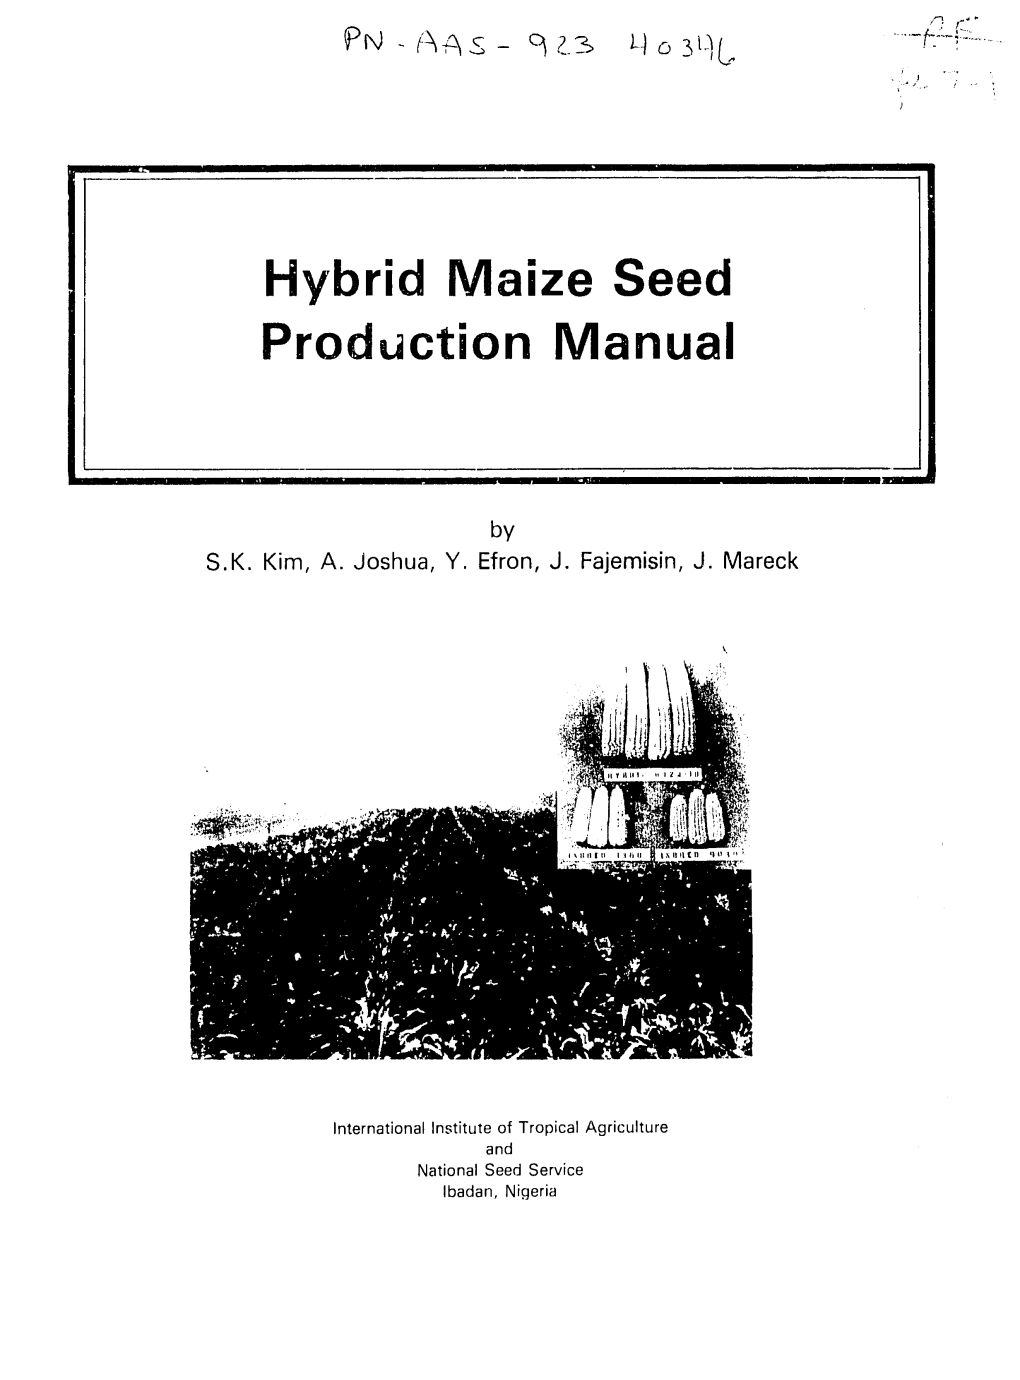 Hybrid Maize Seed Production Manual